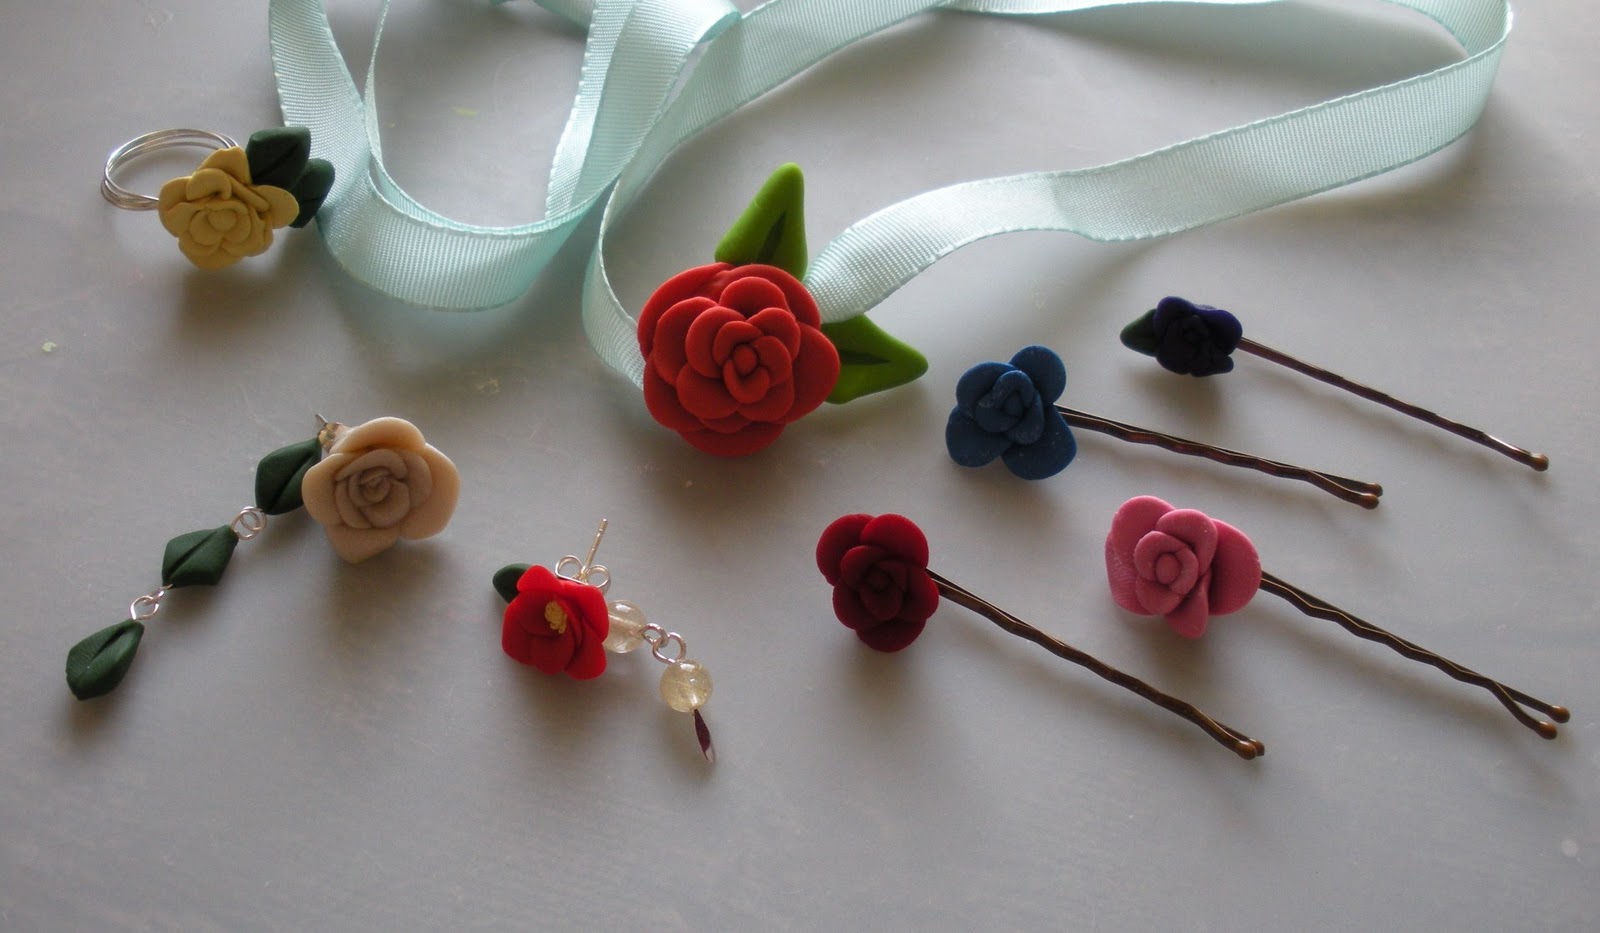 Mini Polymer Clay Flowers - Sugar Bee Crafts